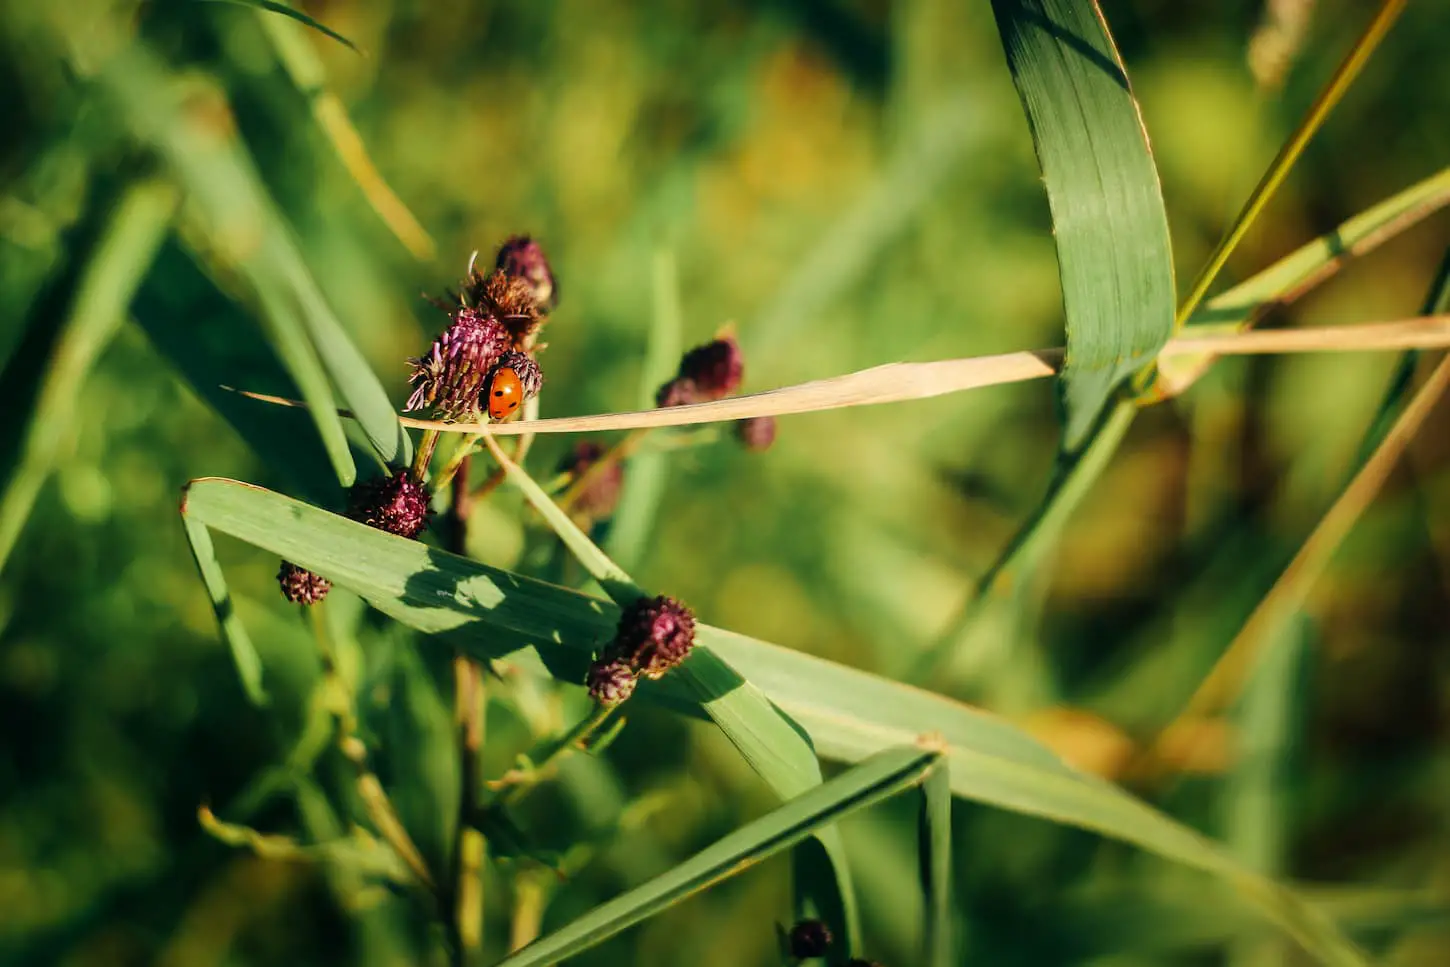 An image of a cute ladybird bug on a green flower plant in a summer sunny garden.